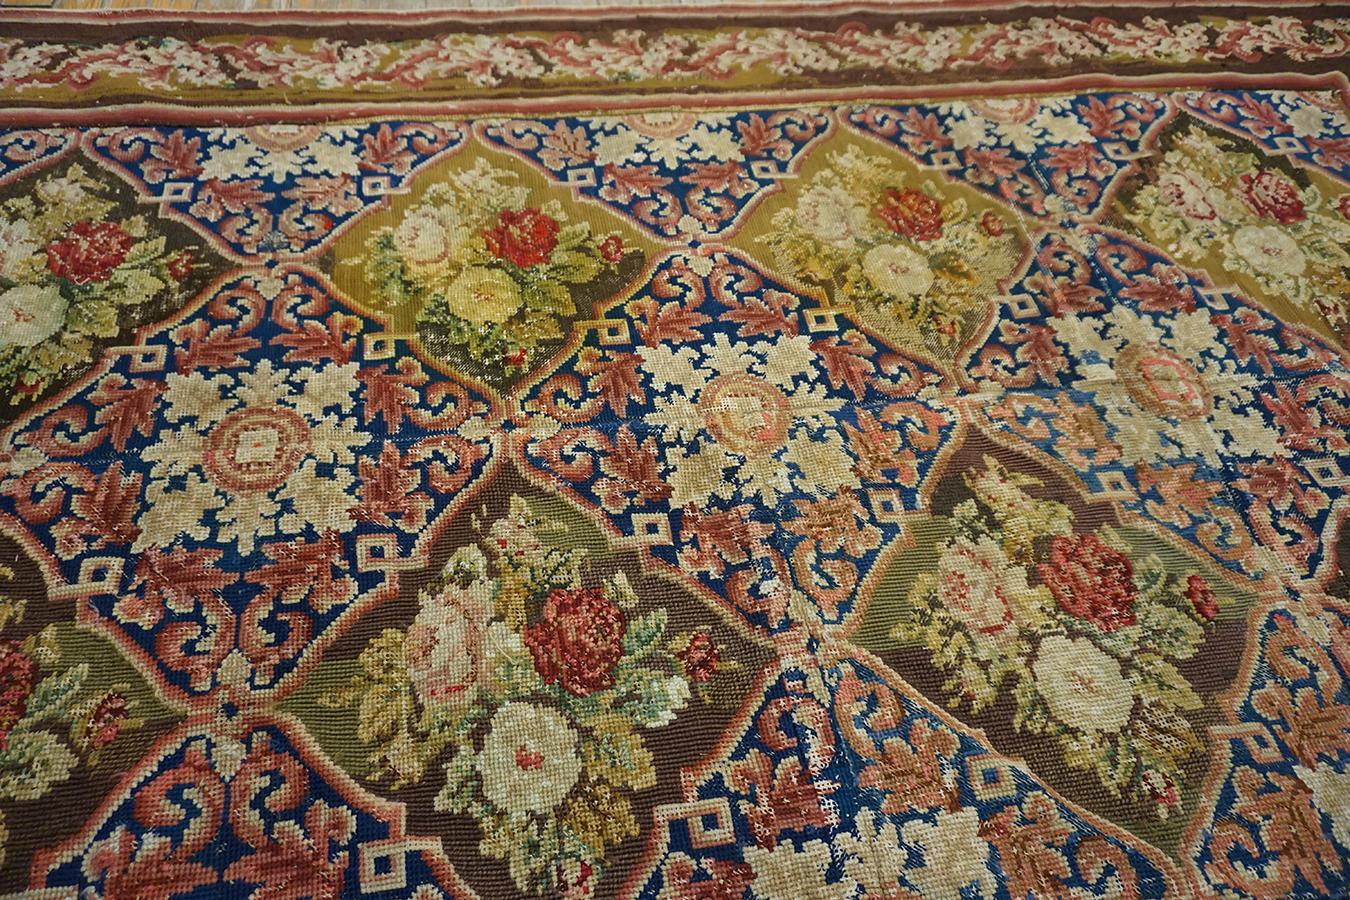 19th Century English Needlepoint Carpet ( 7'6